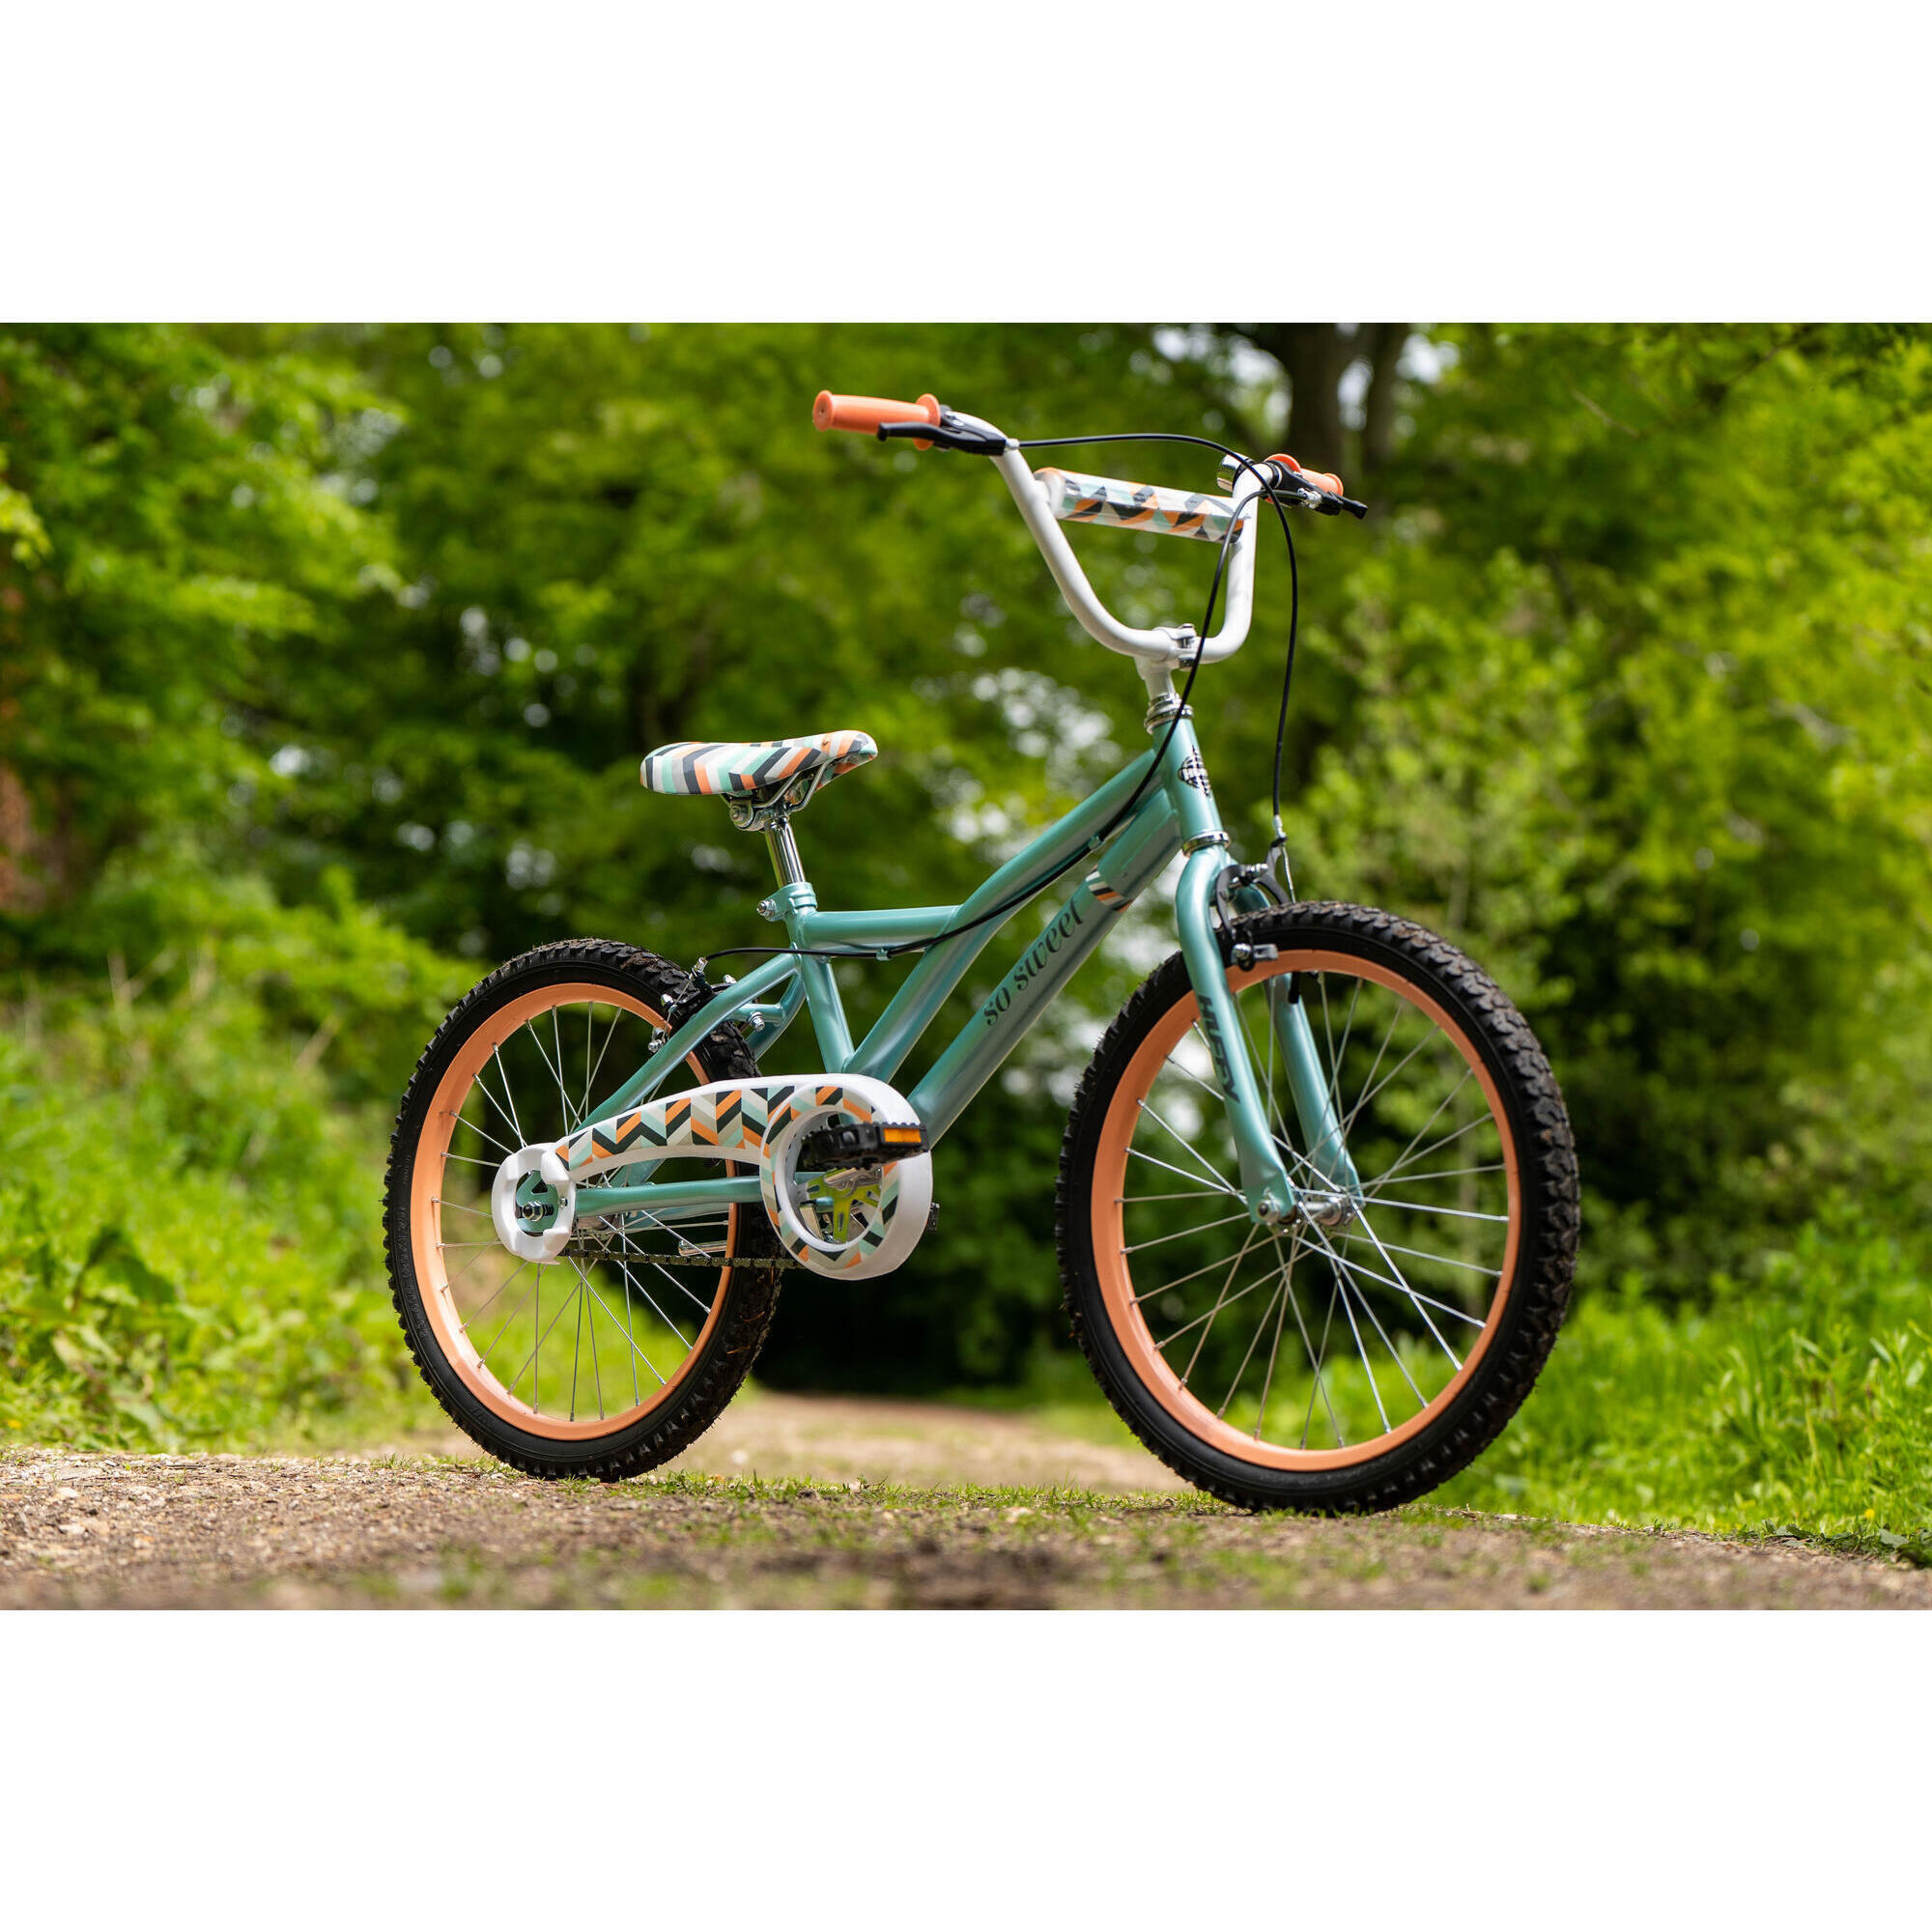 Huffy So Sweet 20" Wheel Girls Bike For Kids 6-9 Sea Crystal Teal BMX Style 5/7